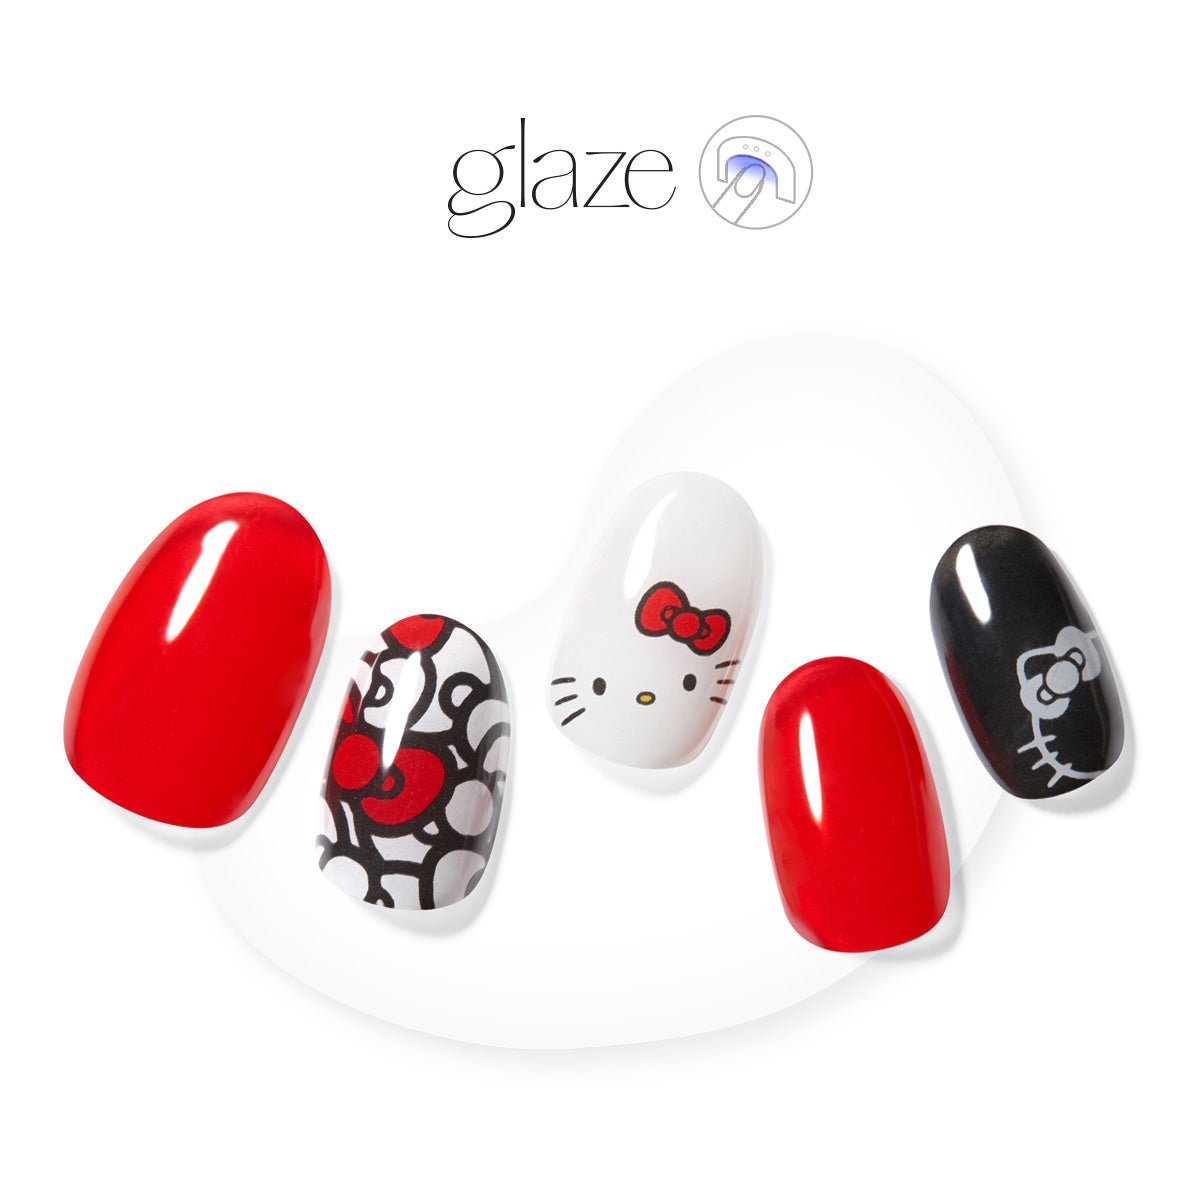 Classic Ribbon - Glaze Art - Manicure - Dashing Diva Singapore